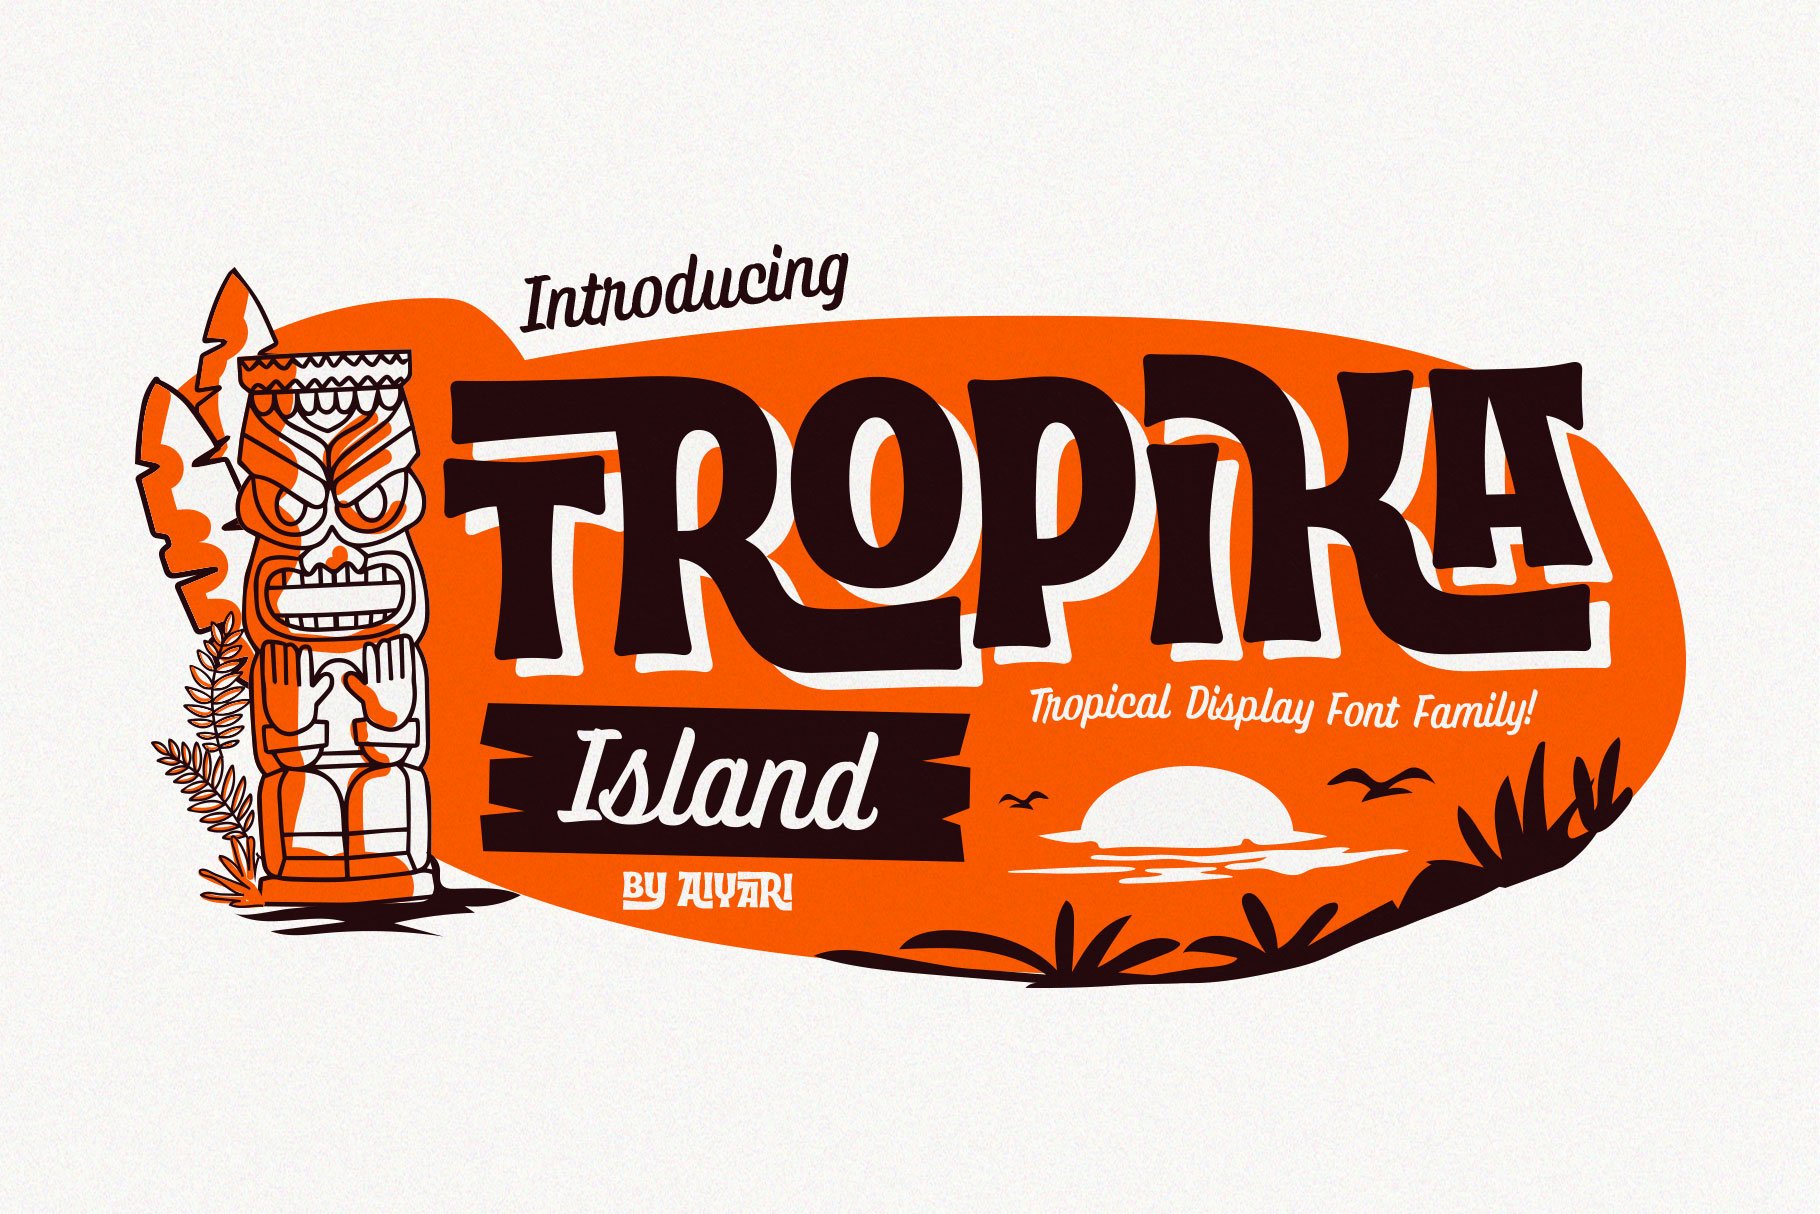 Tropika Island Font Family cover image.